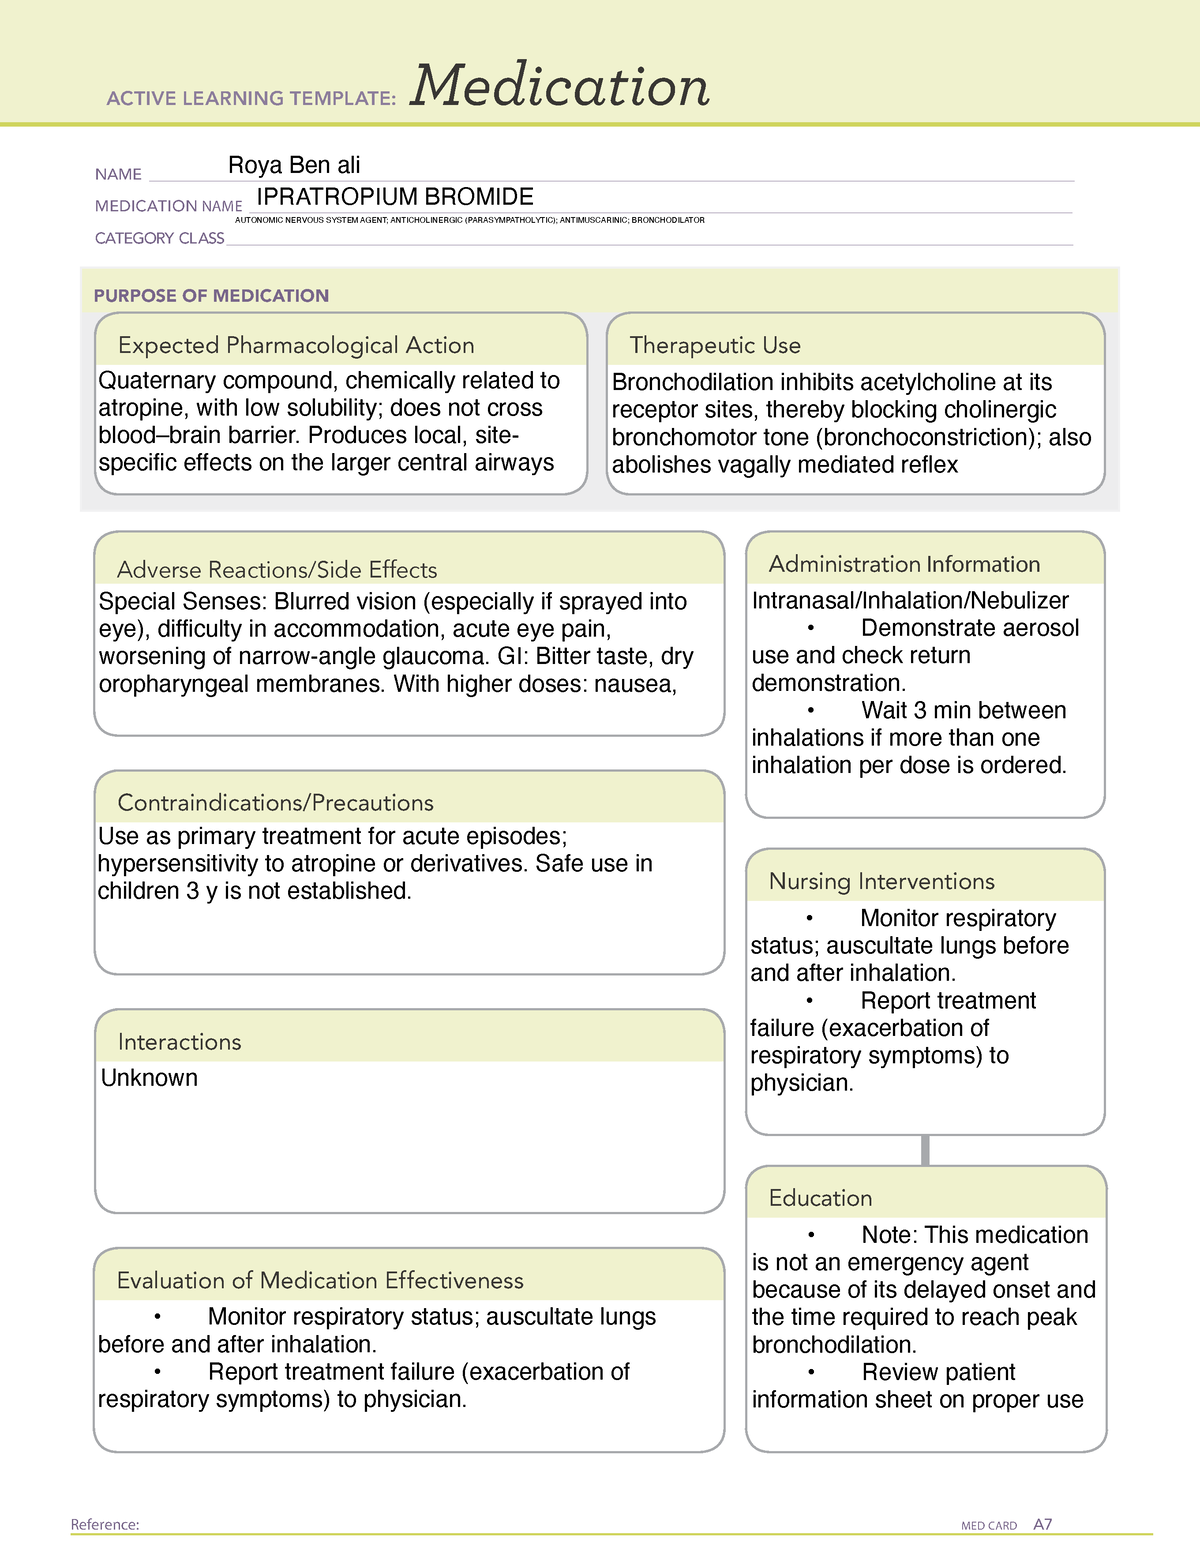 Ipratropium Medication template Reference: MED CARD A Medication